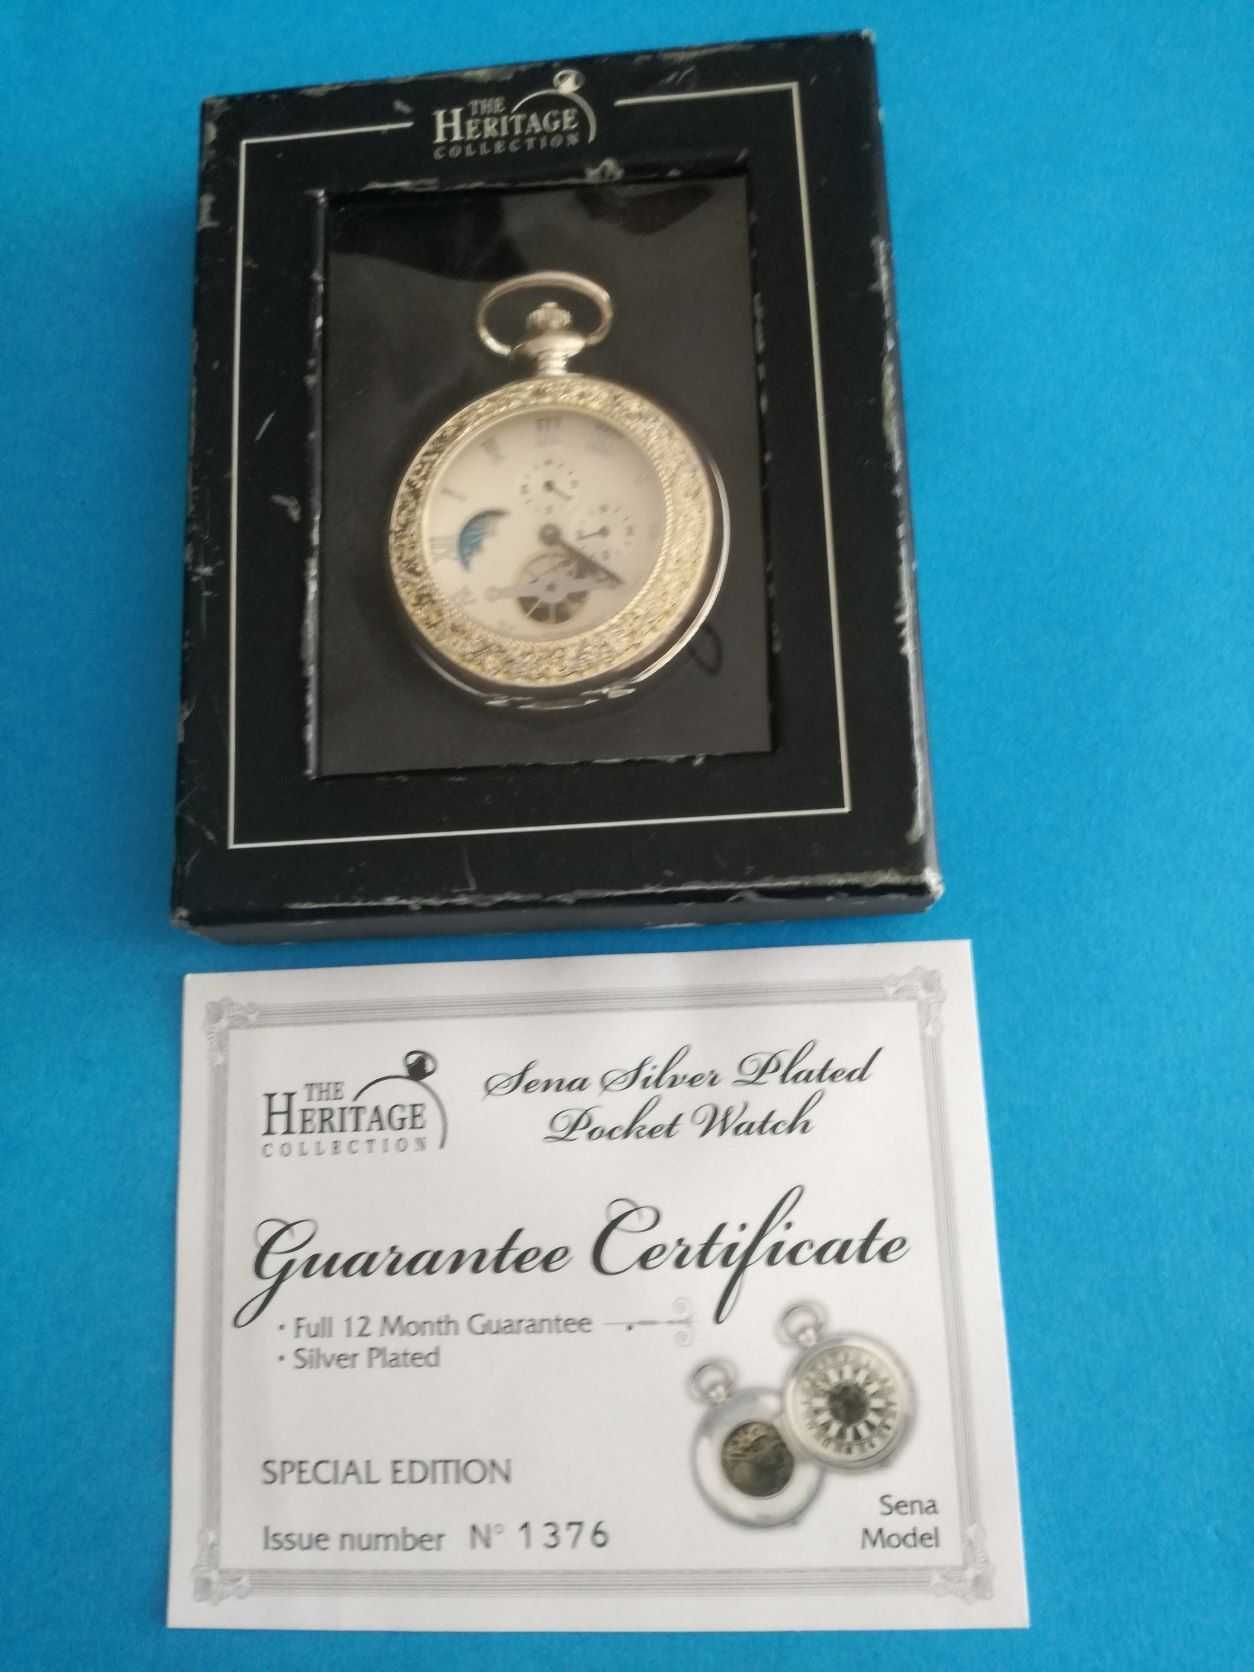 "Heritage Collection"-Relógio Bolso, Banho Prata-Ed Esp 1376-Mod. SENA